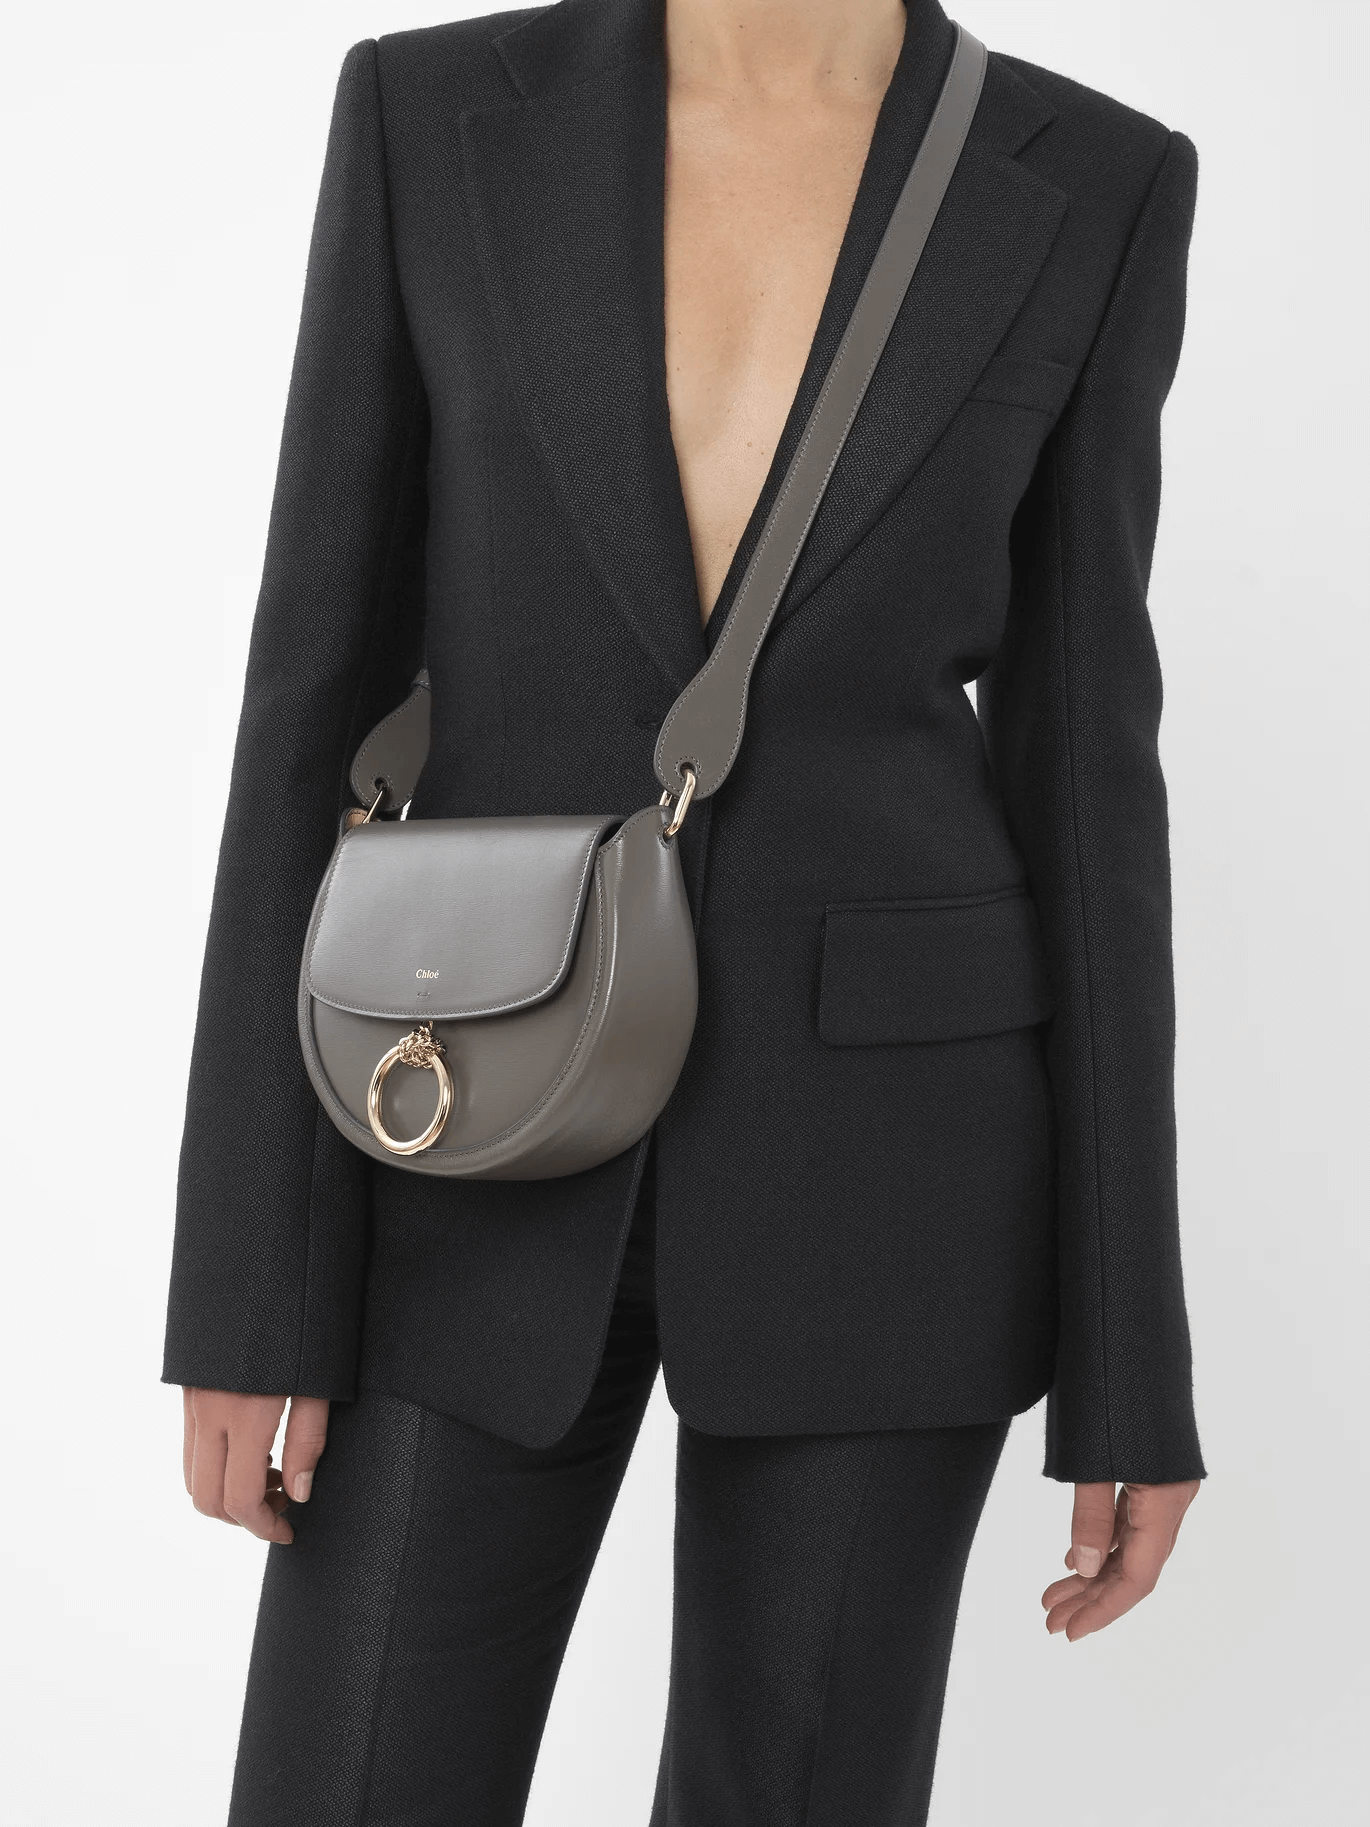 Chloè Arlene Small Crossbody Bag in Elephant Grey available at The New Trend Australia.